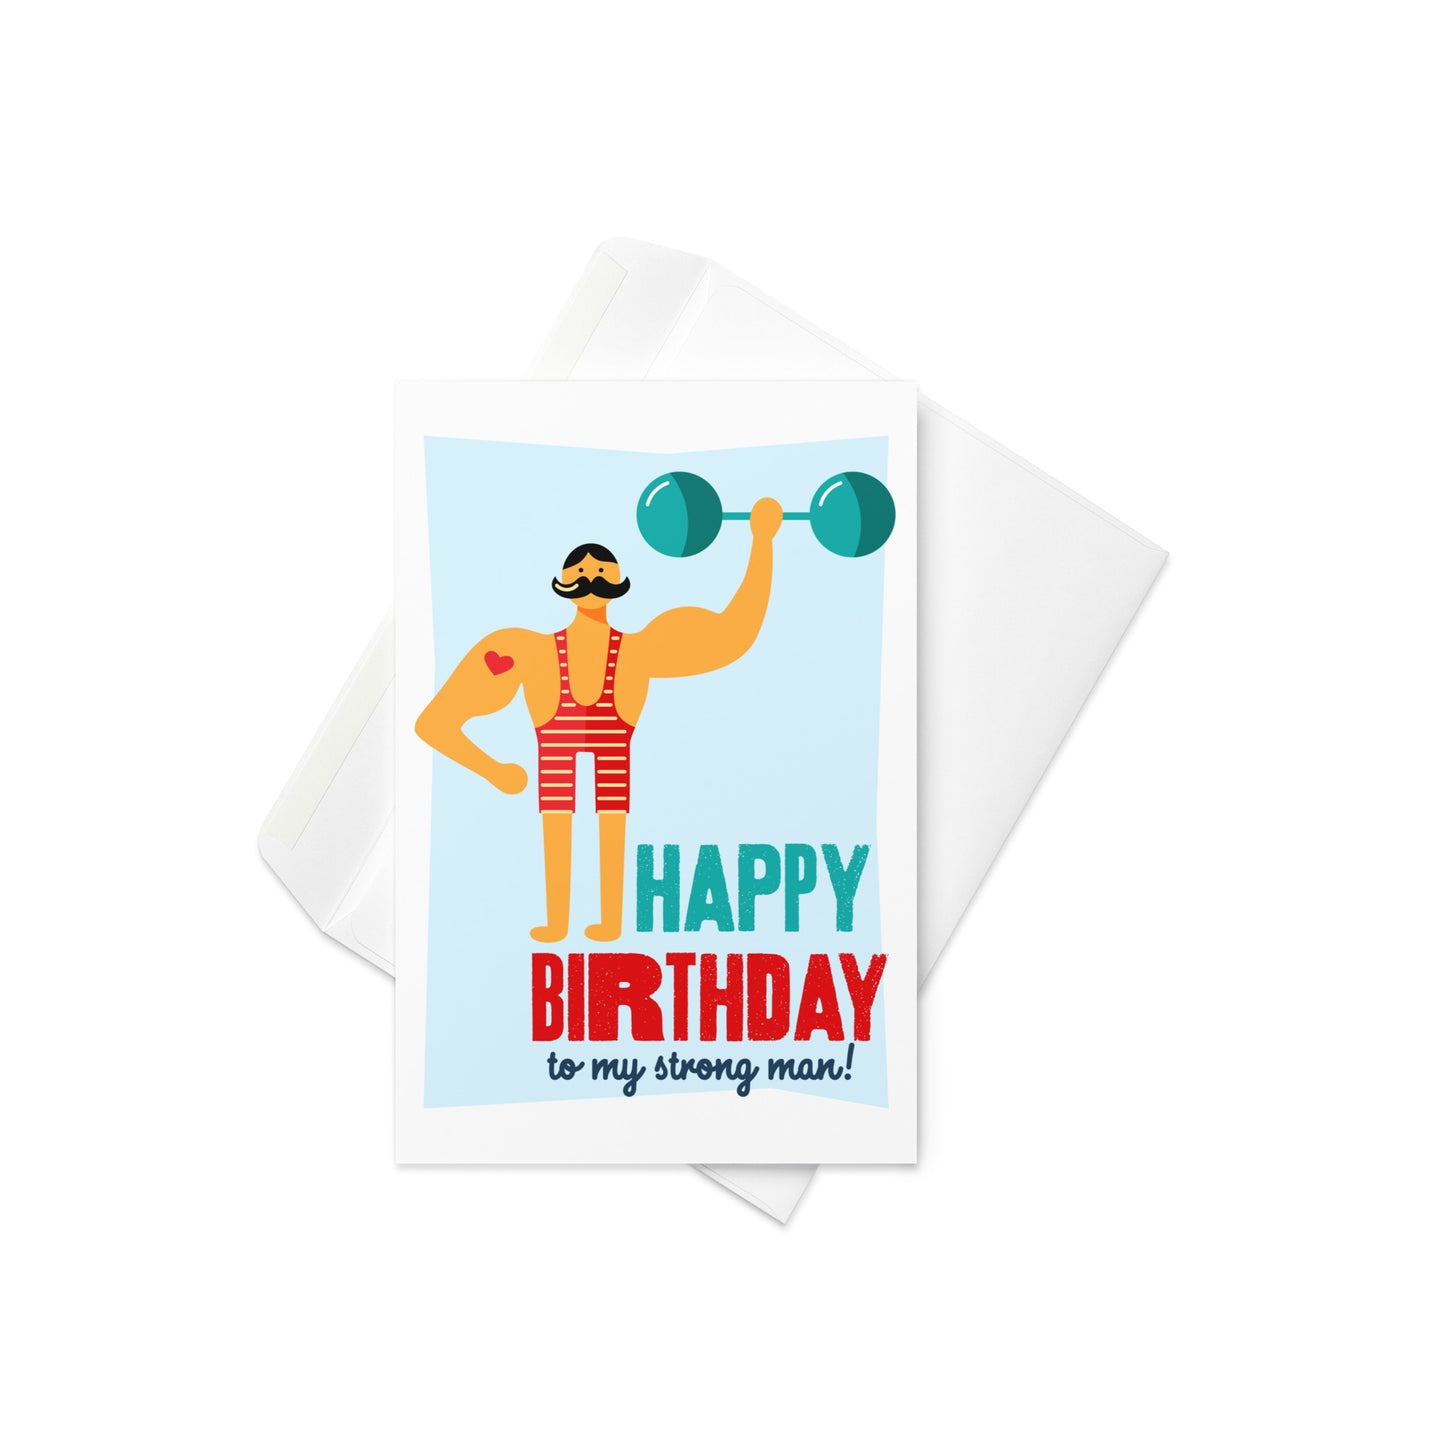 Happy Birthday to my Strong Man! - Birthday card / Greeting card